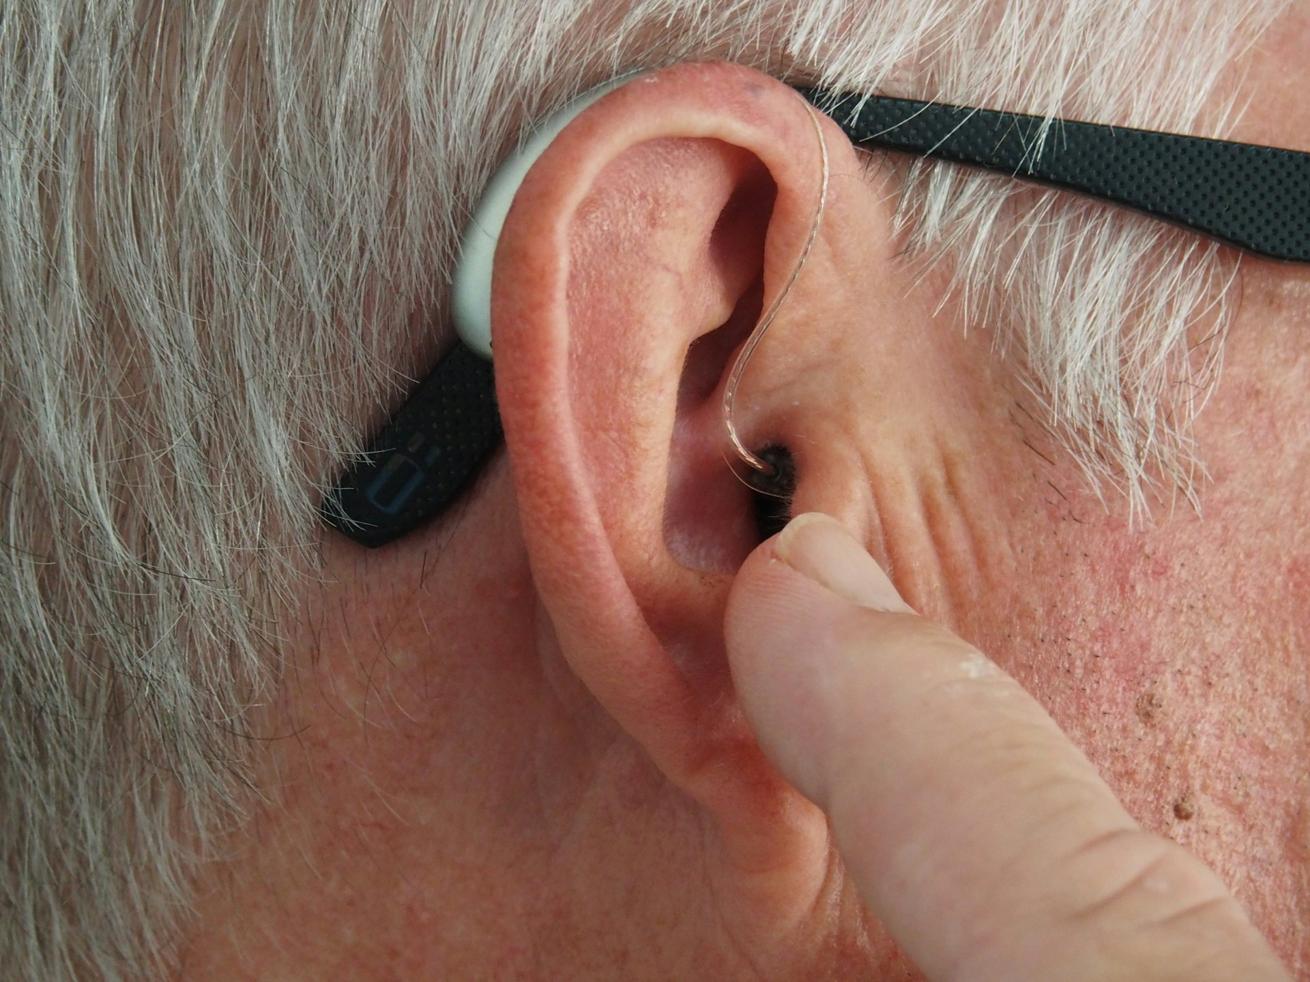 A man wearing a small, discreet hearing aid